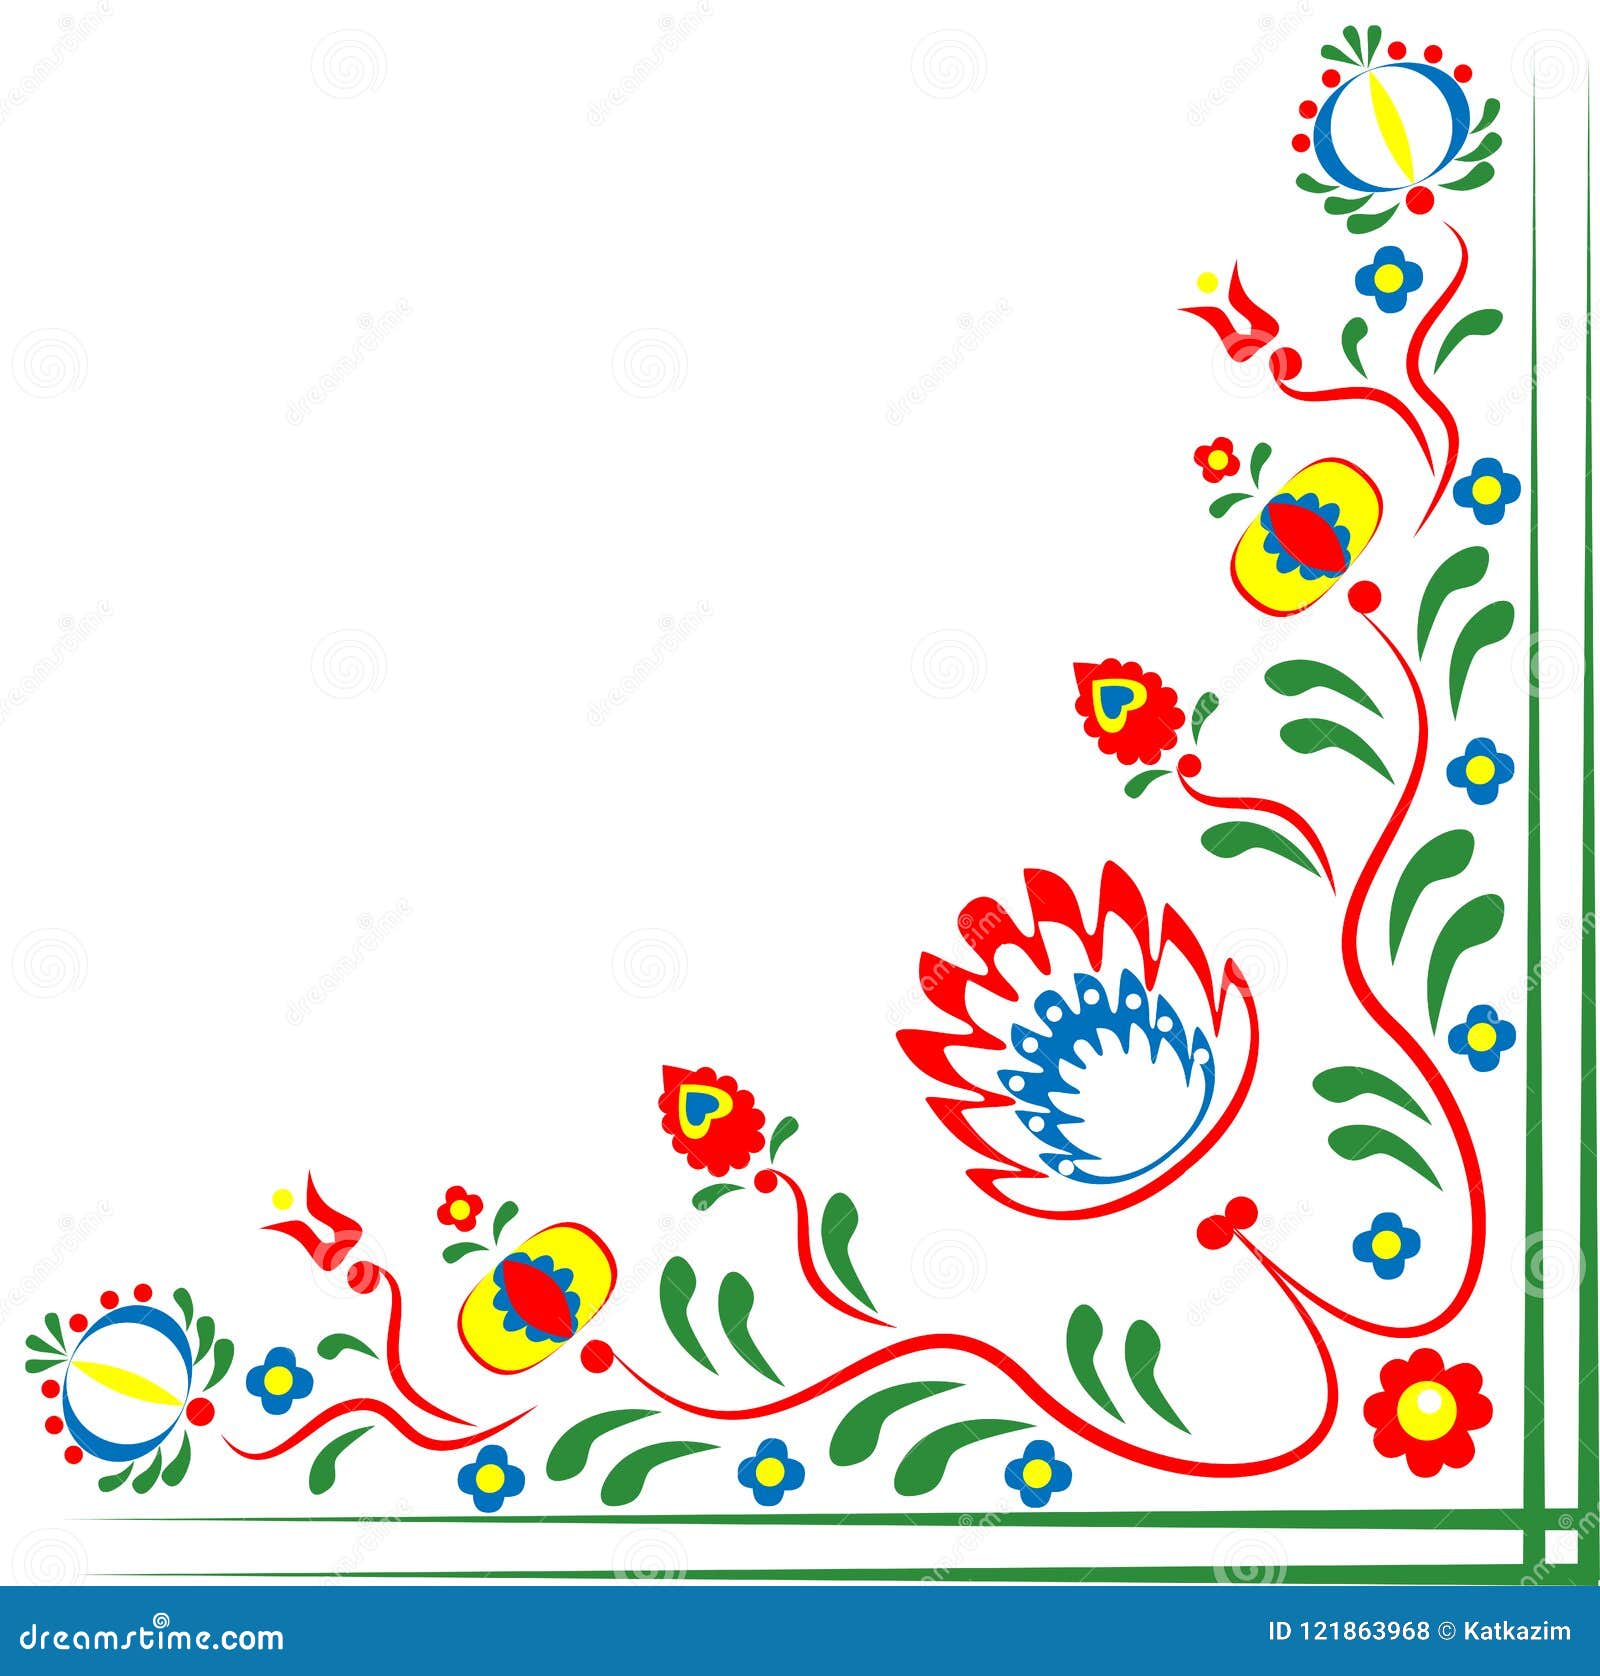 Folklore motifs of flowers stock illustration. Illustration of ...